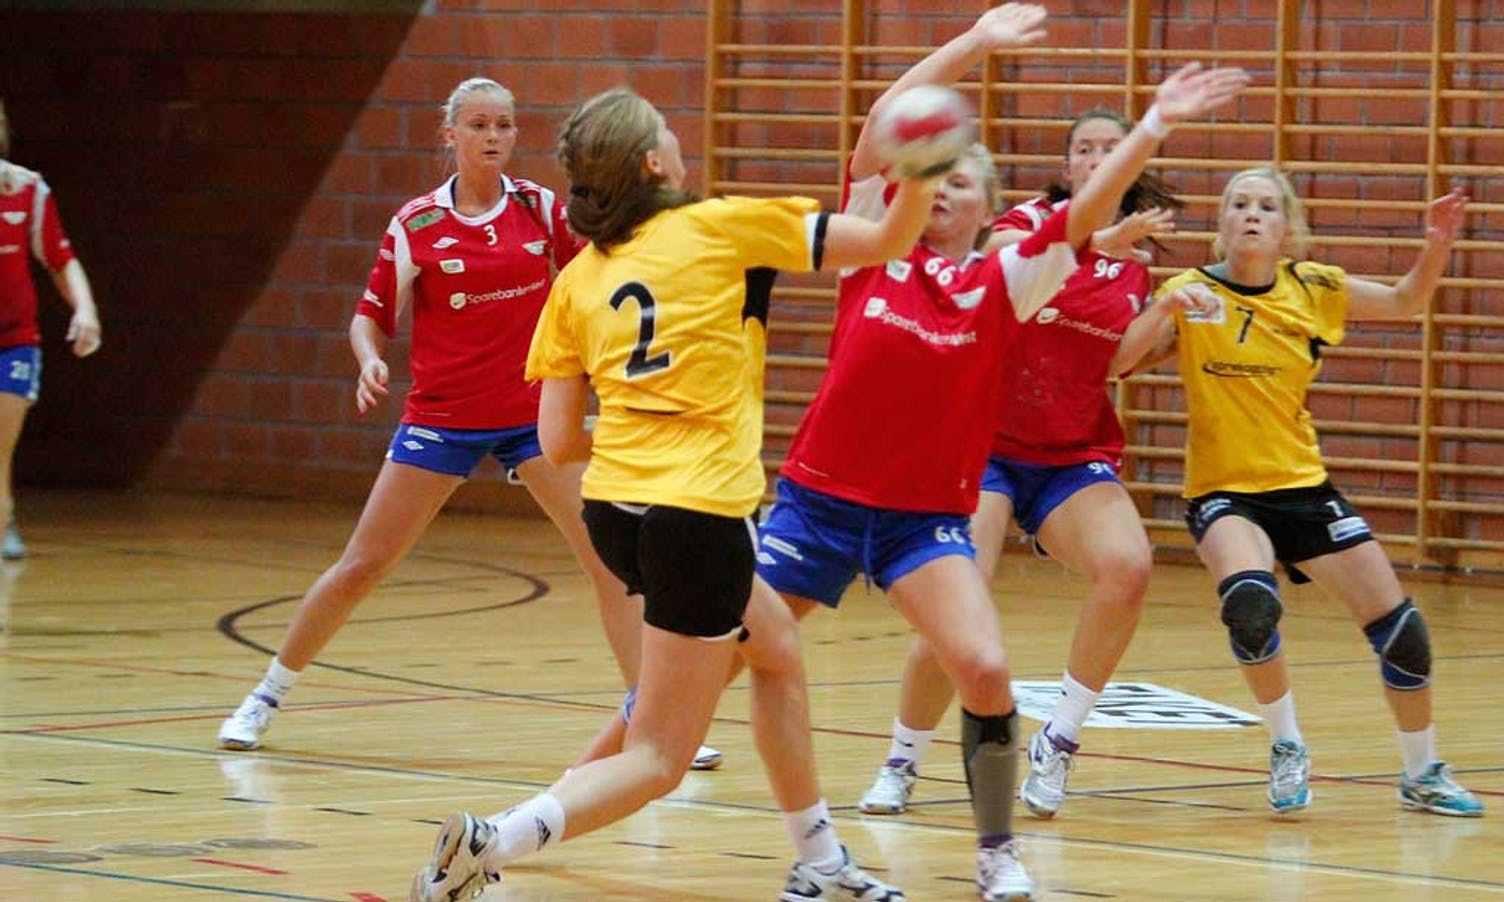 Irene Tangerås skåra 11 mål (foto: AH)